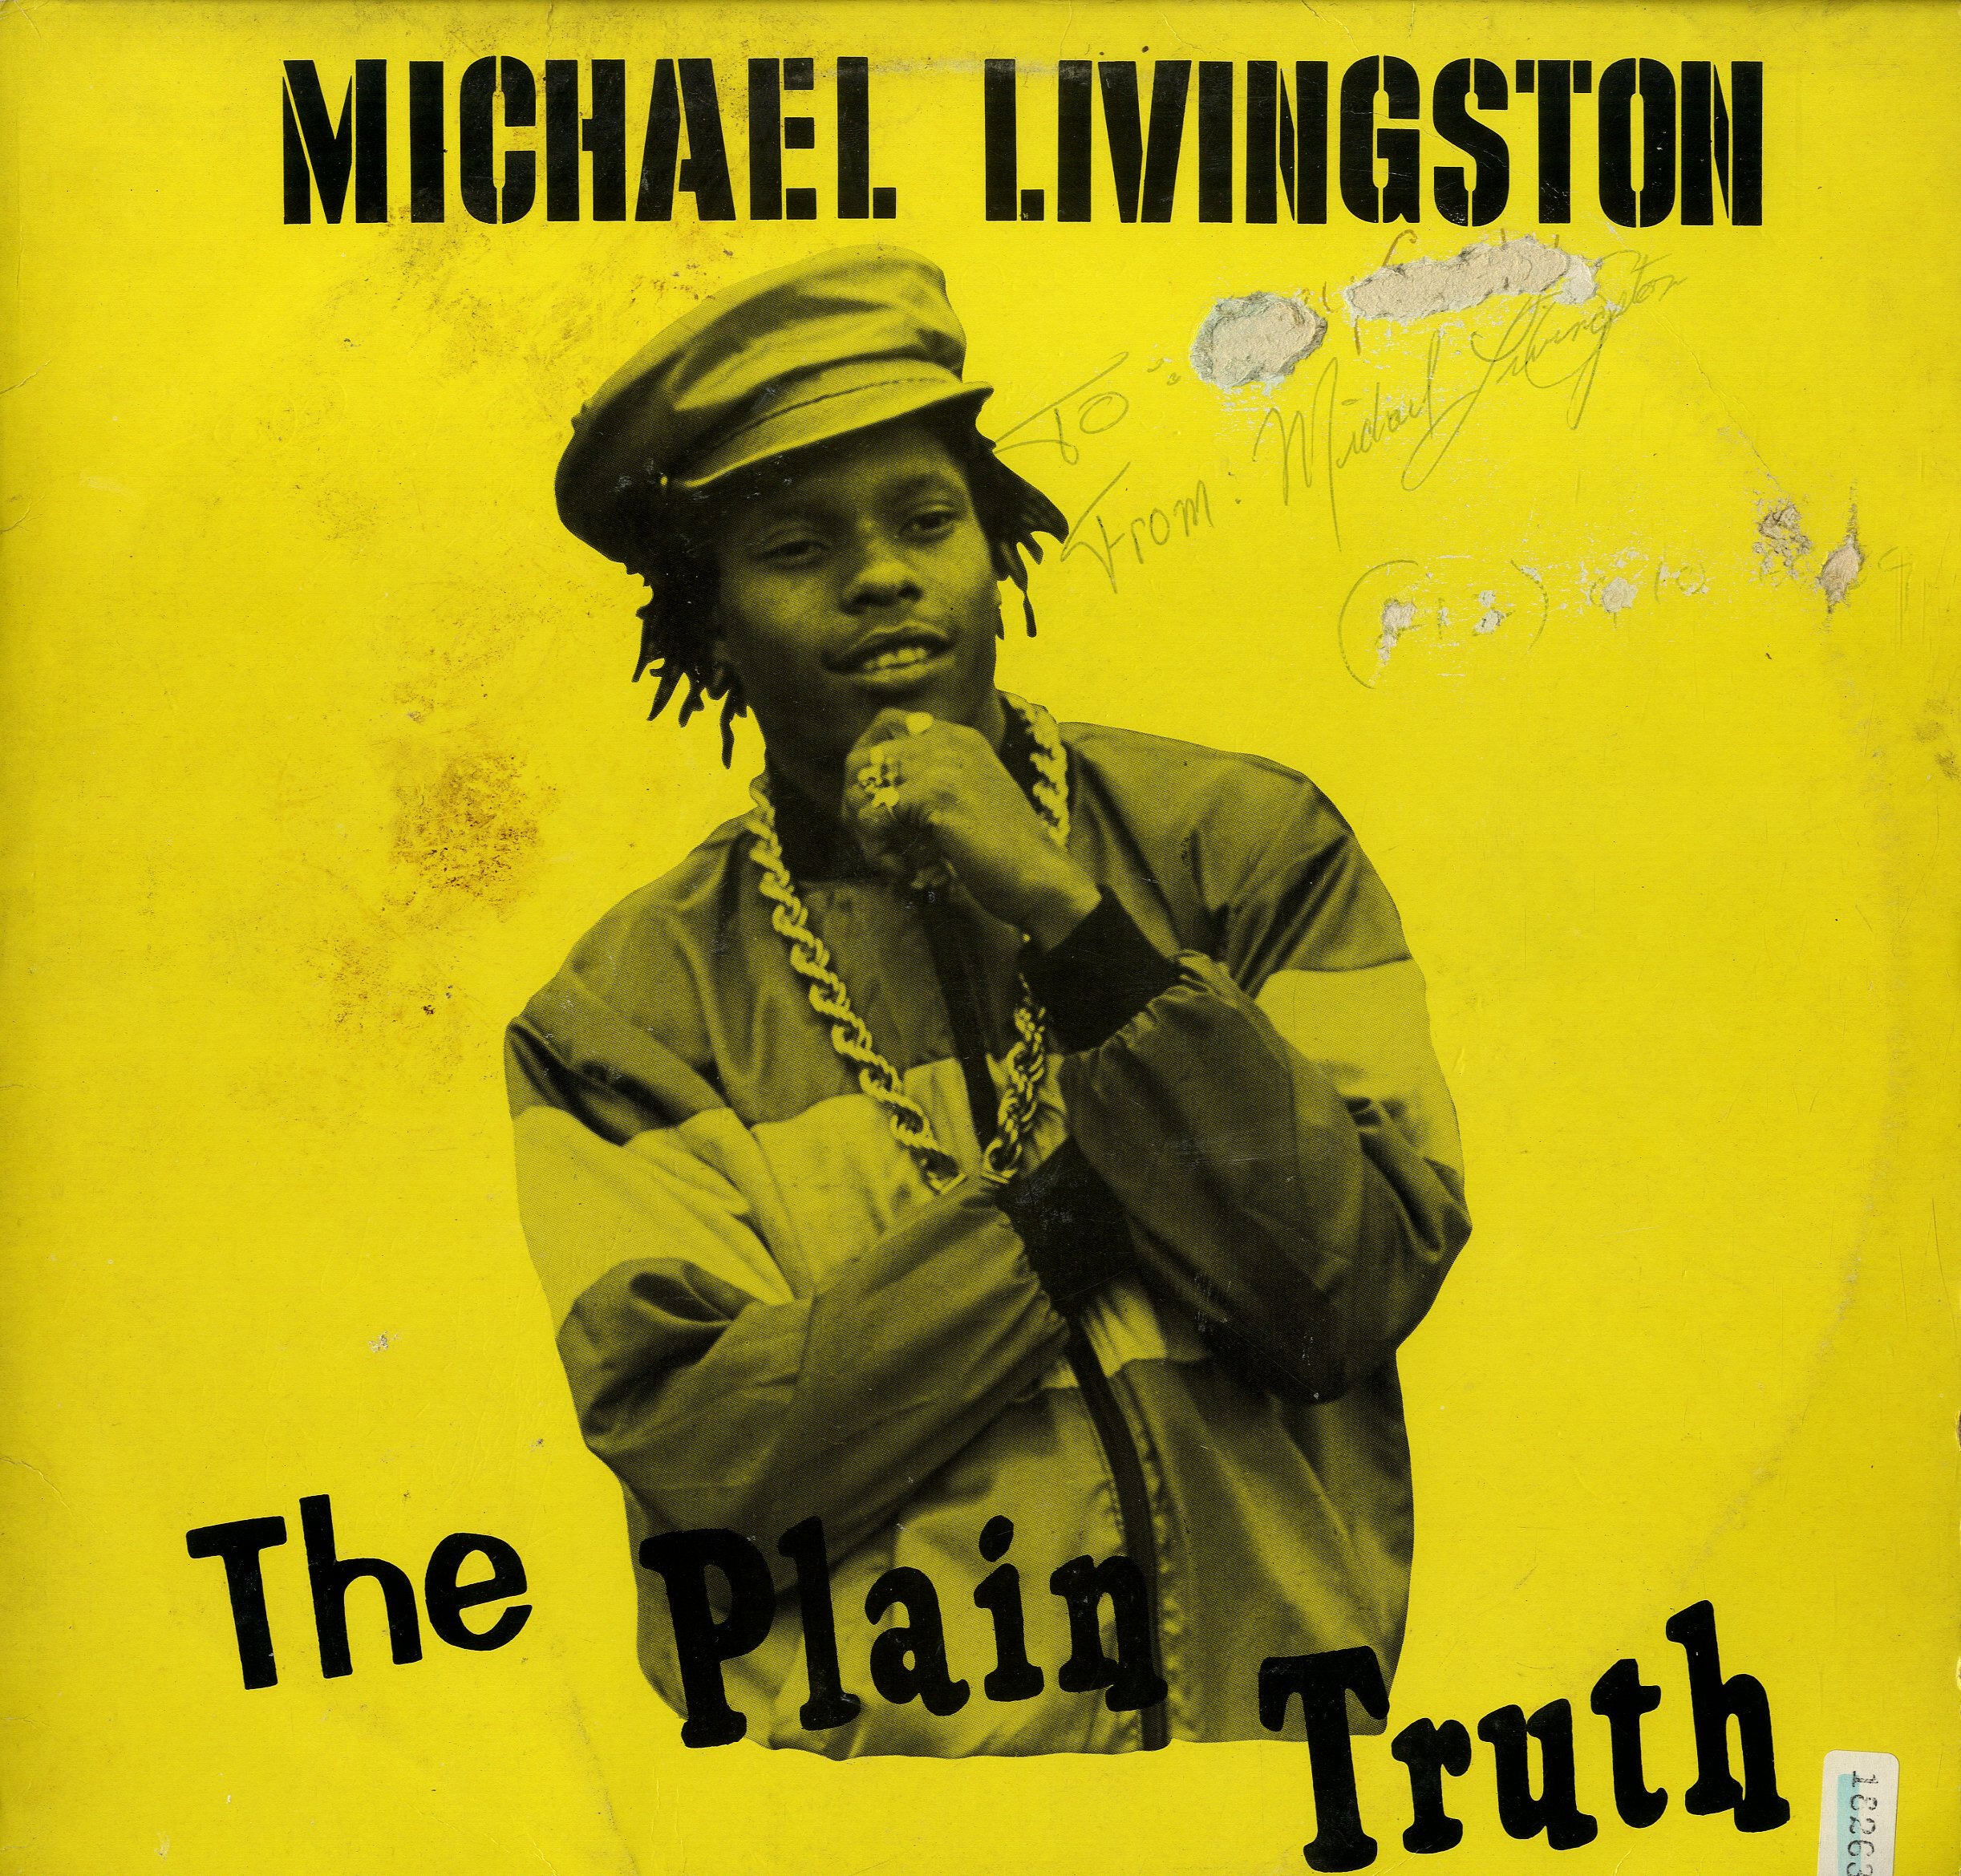 MICHAEL LIVINGSTON [The Plain Truth]